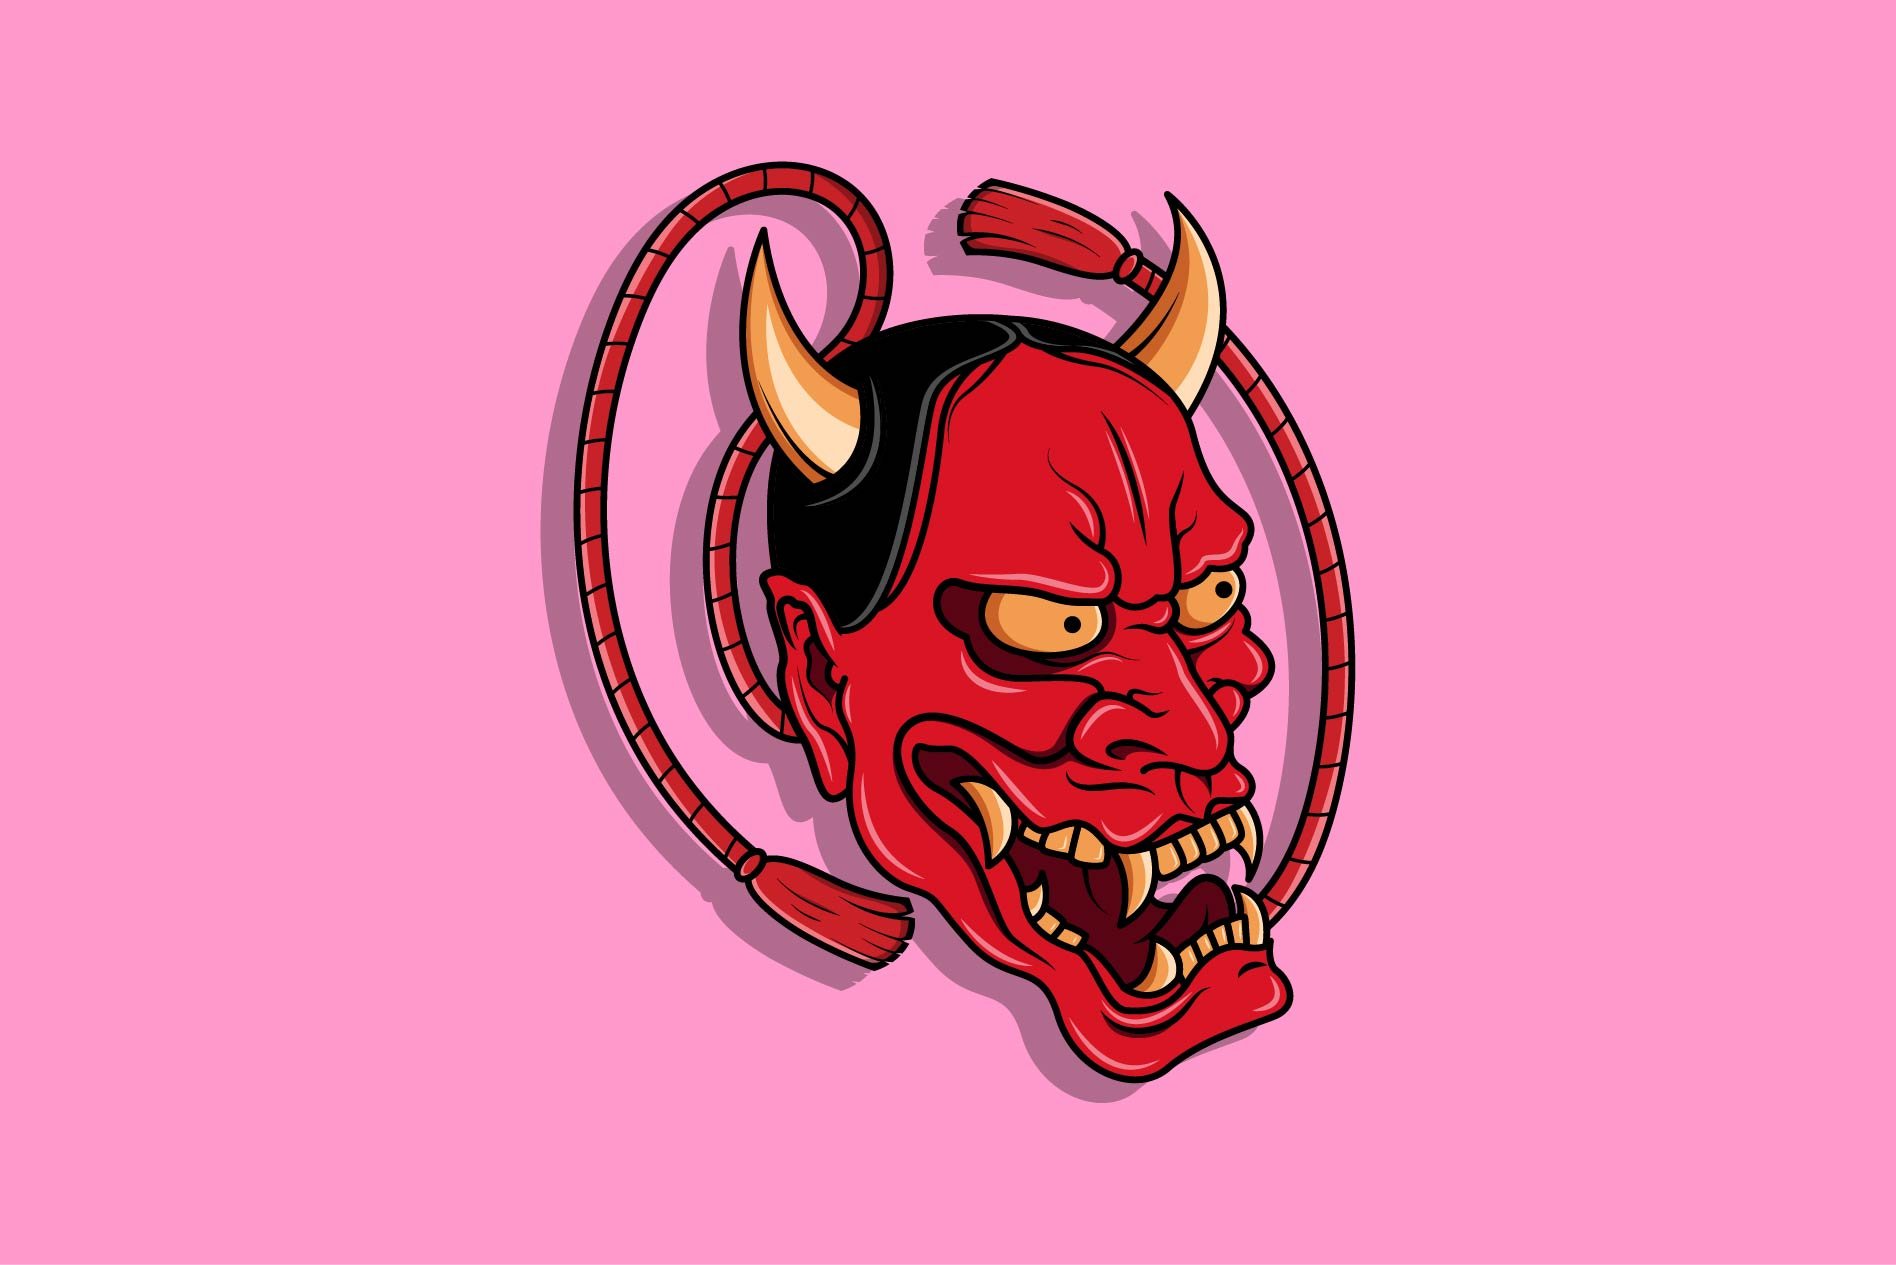 Oni japanese devil mask #32 cover image.